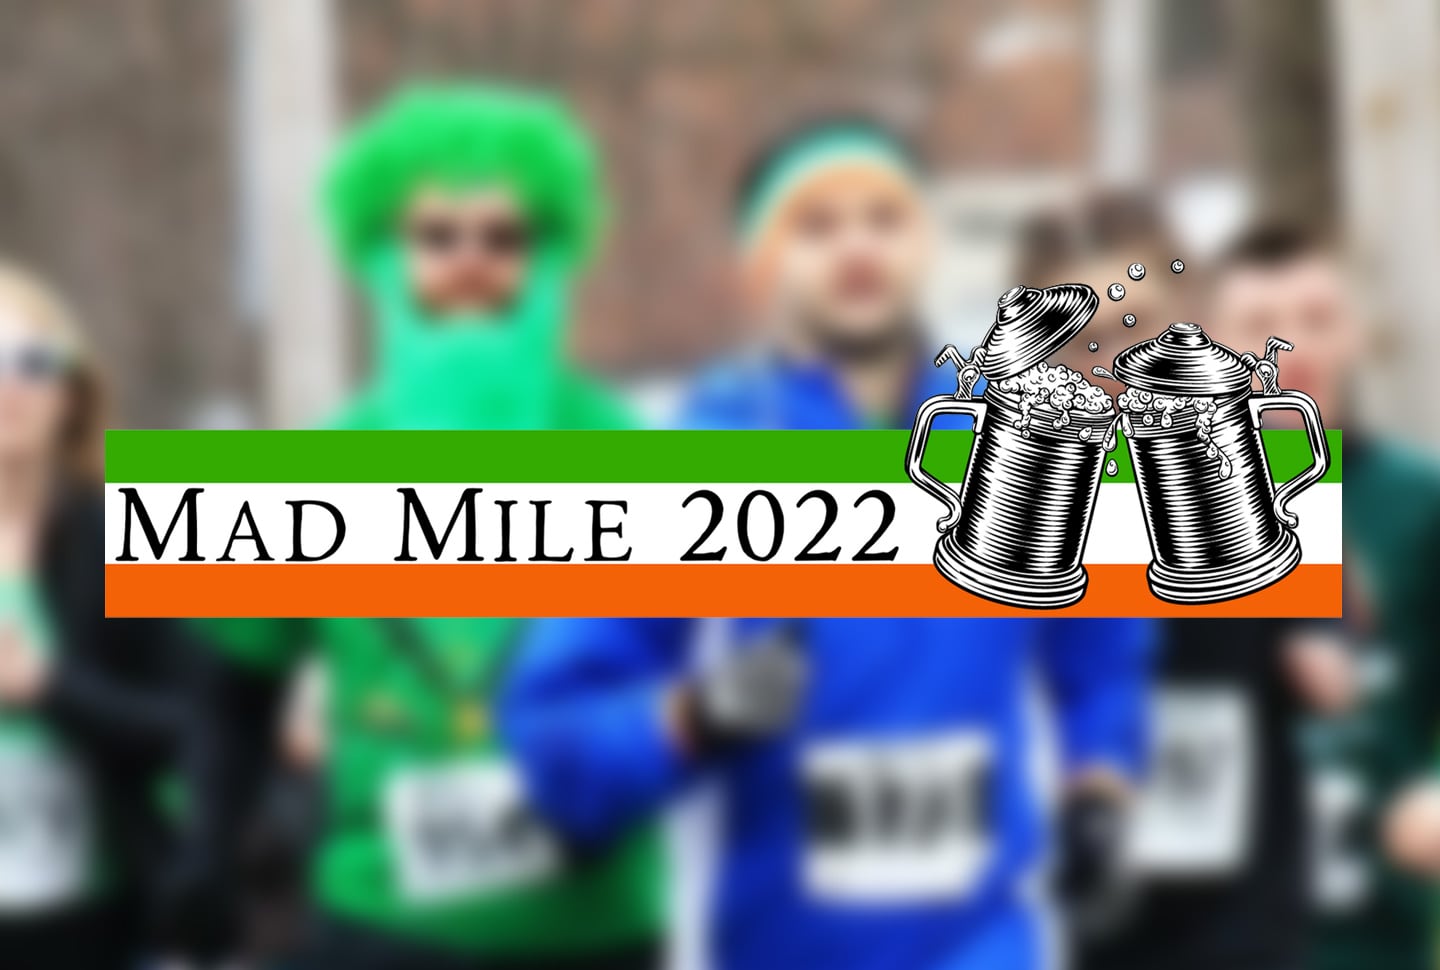 Mad Mile background image